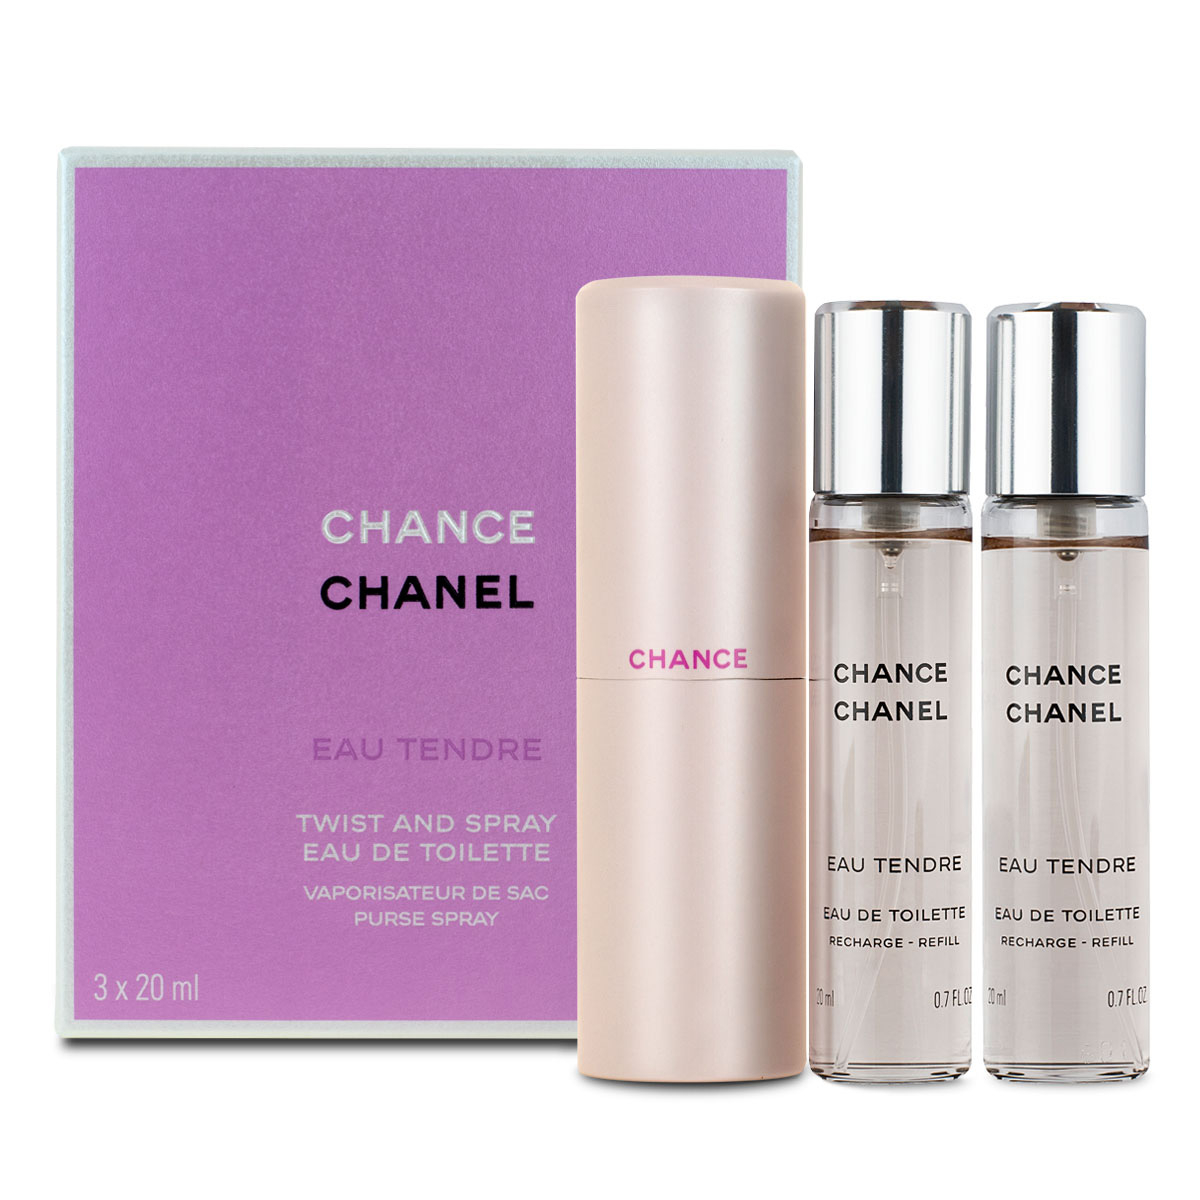 Chanel Chance Eau Tendre Eau de Toilette Travel Spray 20ml + 2 X 20ml  Refills | Beautybuys Ireland